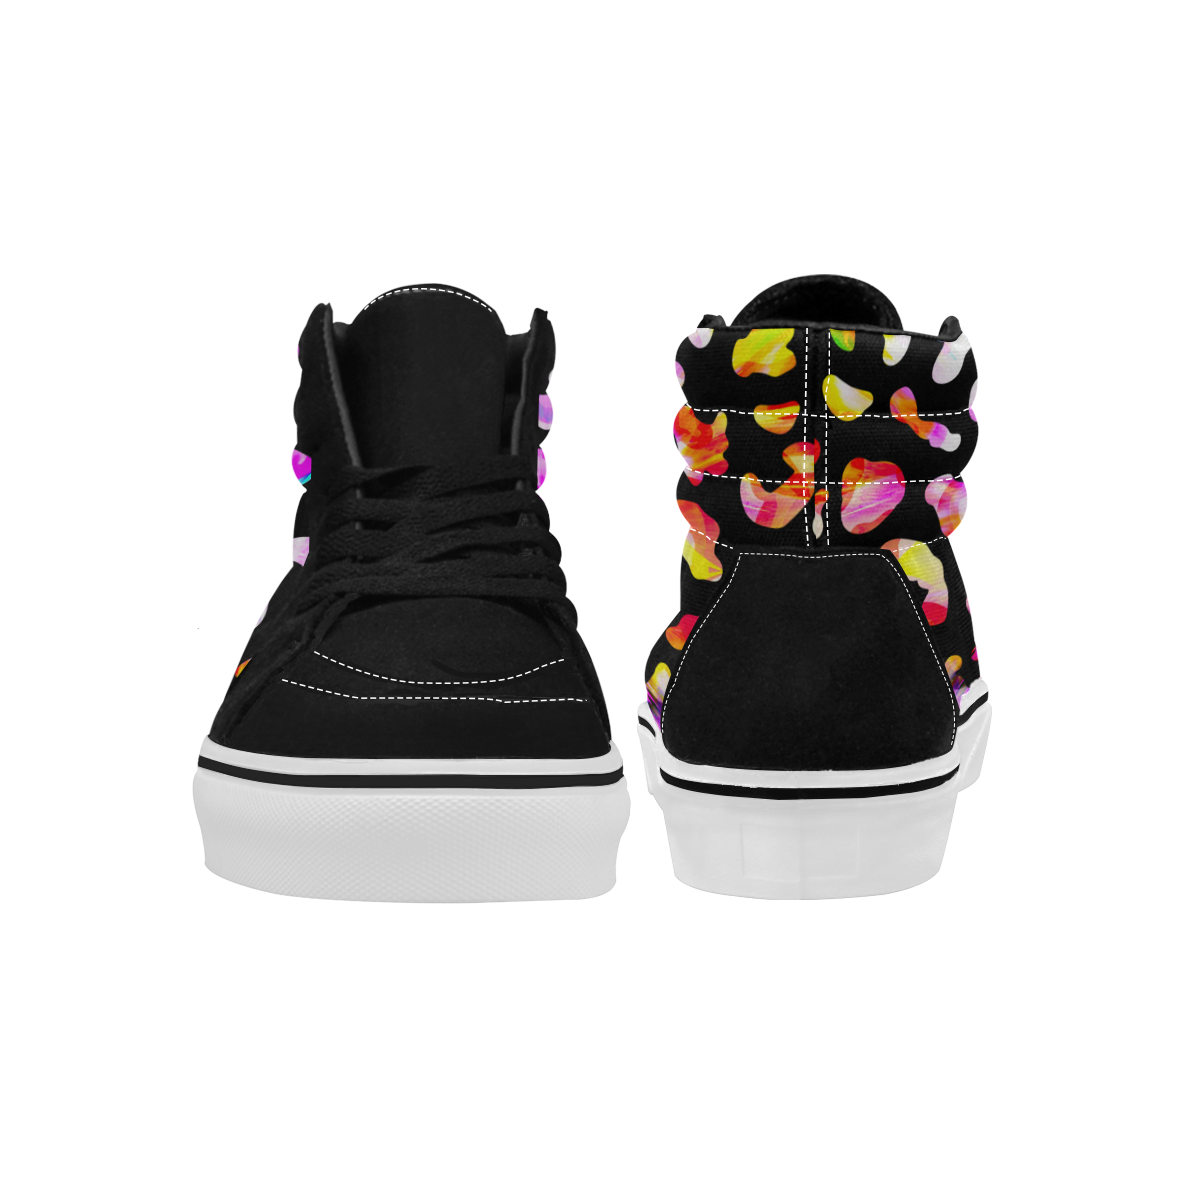 colorful animal print Women's High Top Skateboarding Shoes/Large (Model E001-1)